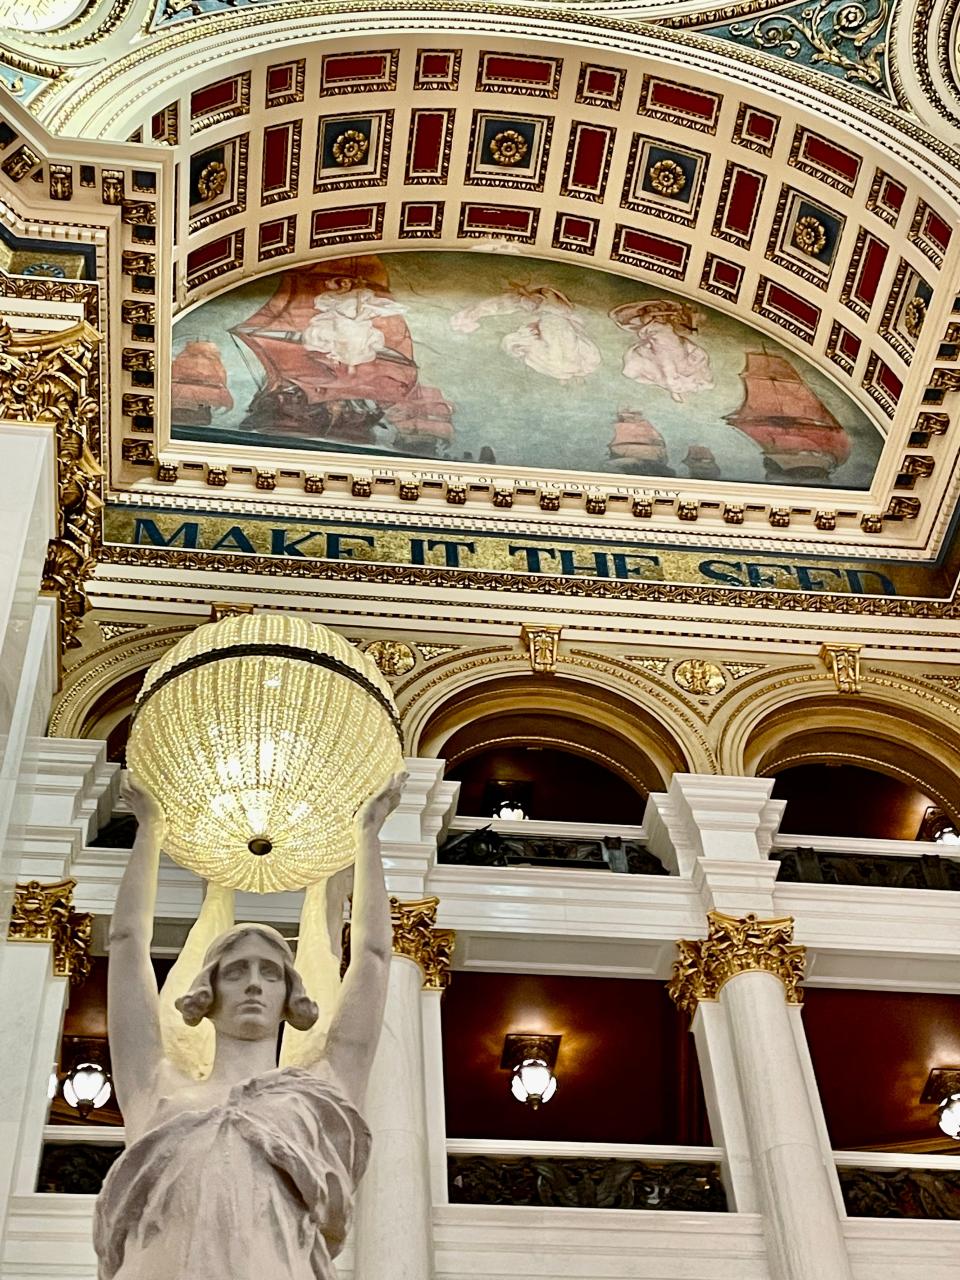 Murals depicting Pennsylvania's rich history surround the ornate capitol rotunda.